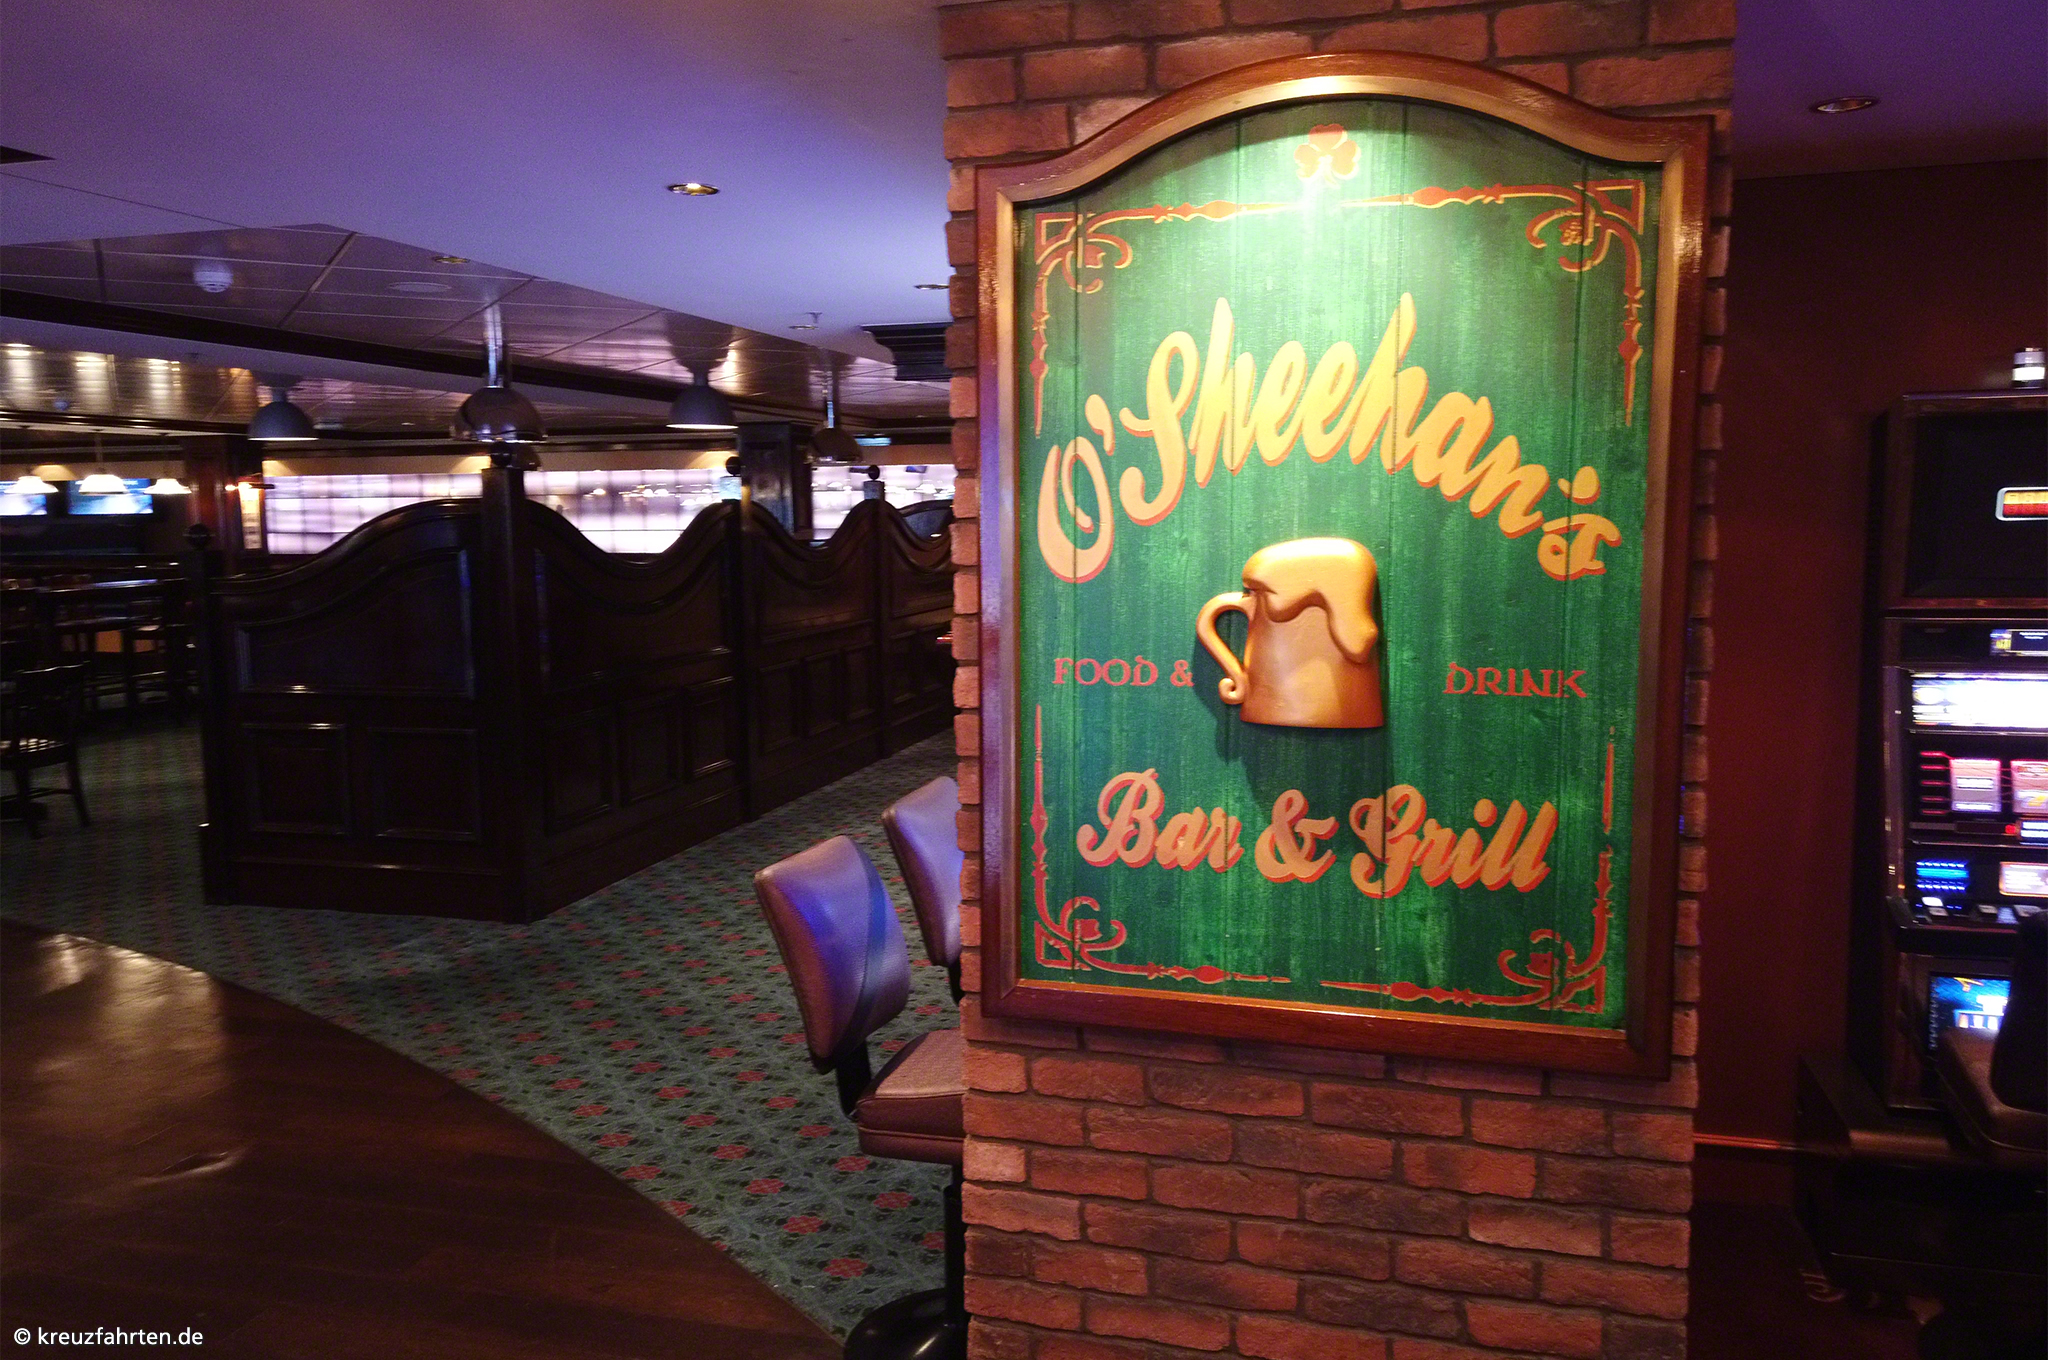 O'Sheehan's Neighborhood Bar & Grill